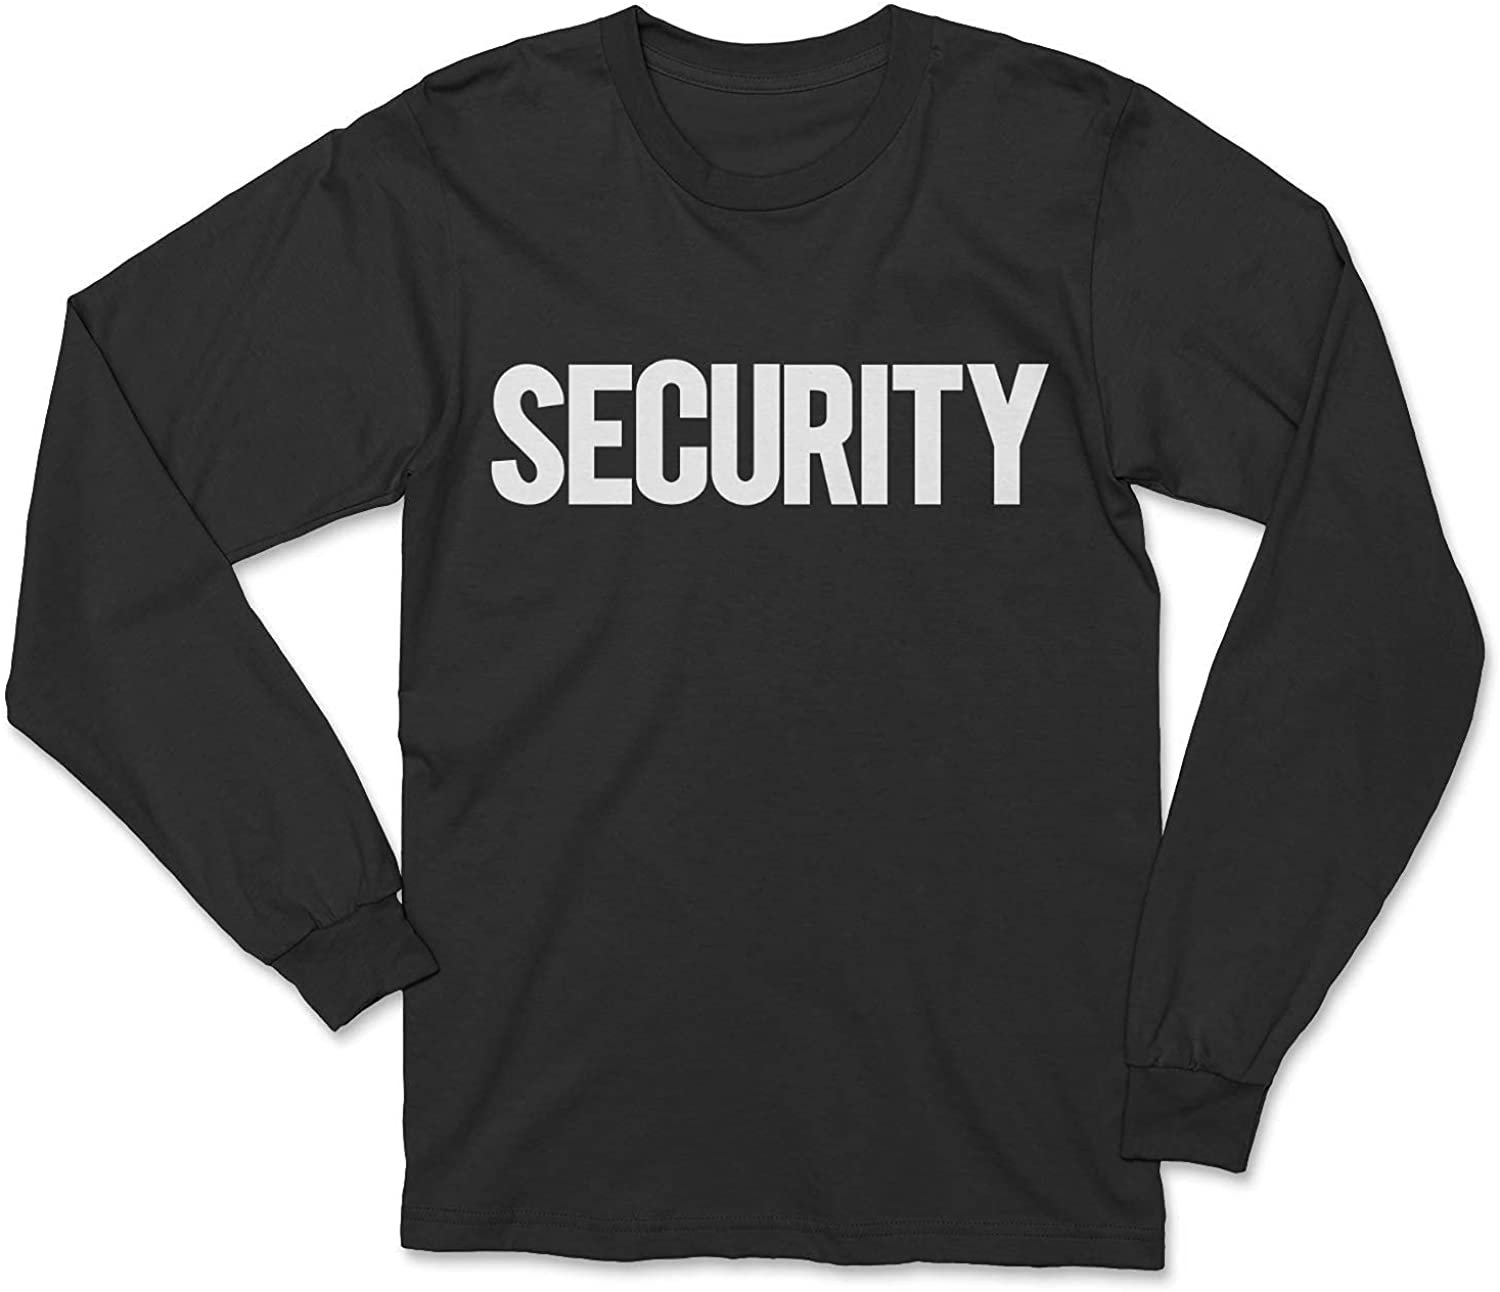 Men's Long Sleeve Security T-Shirt (Black / White, Solid Design)